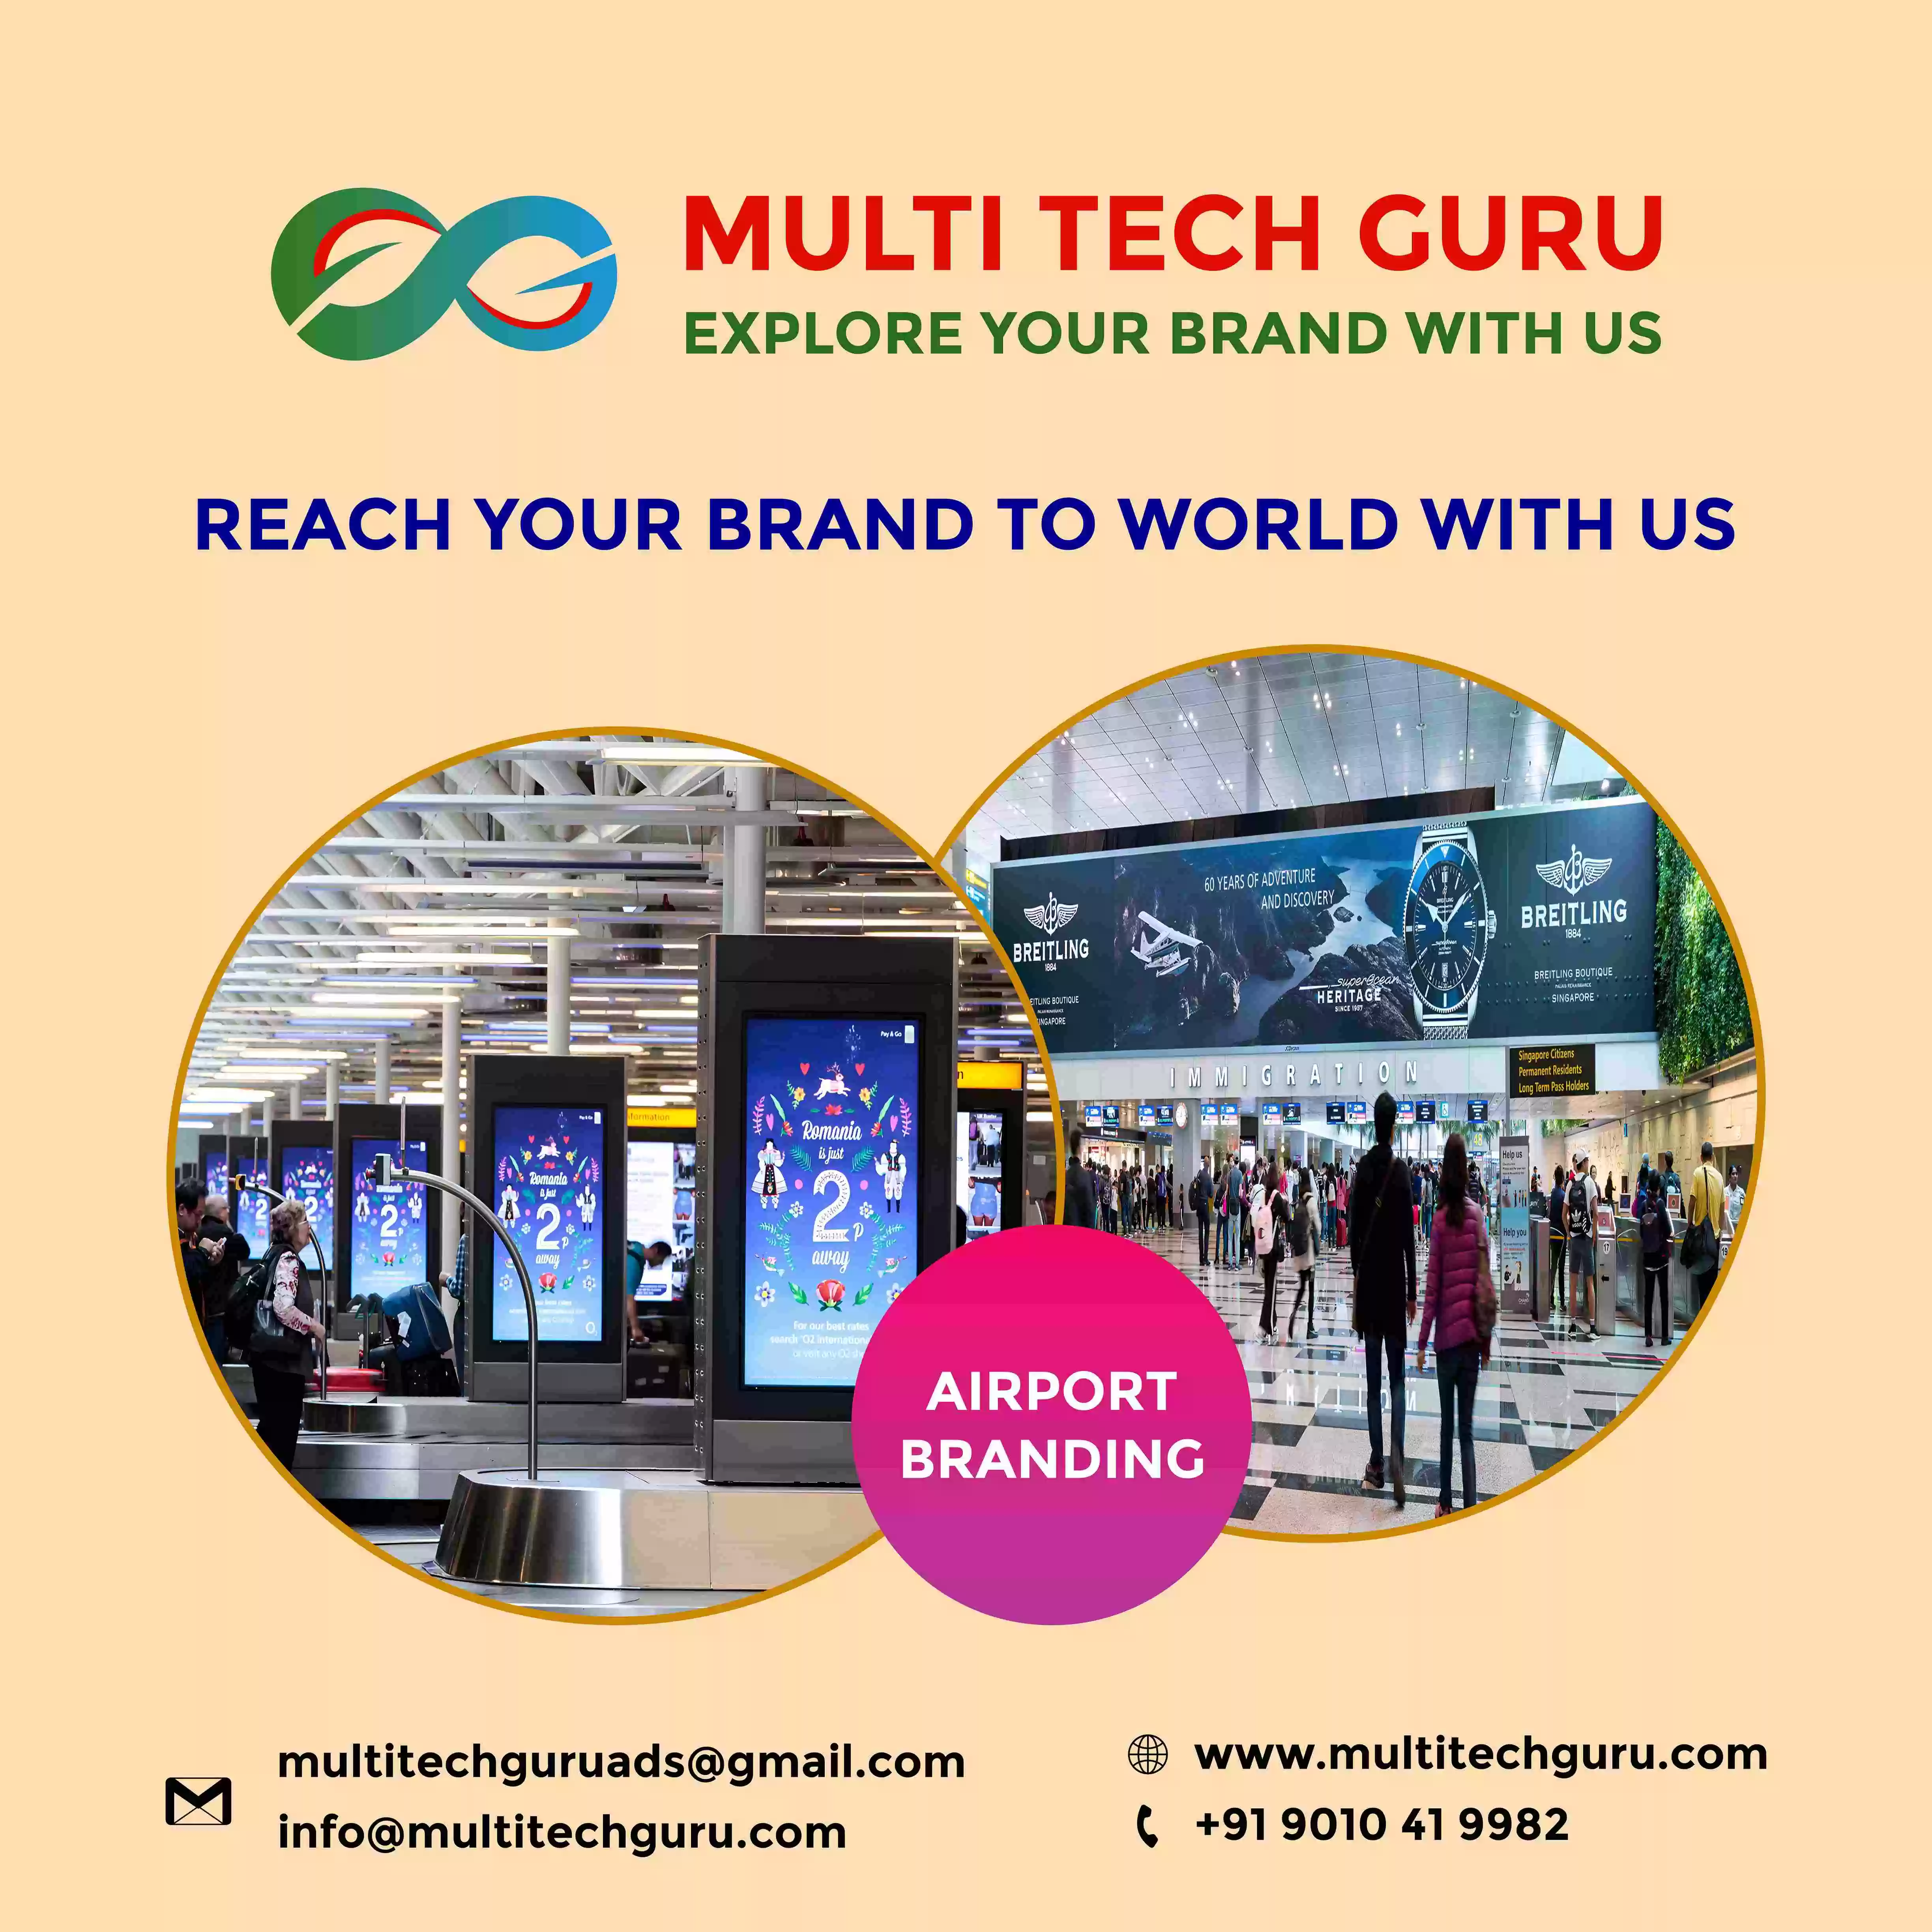 Airport-Branding-advertising-marketing-Multitechguru.com-9010419982-Outdoor-media-advertising-Print-Media-Services